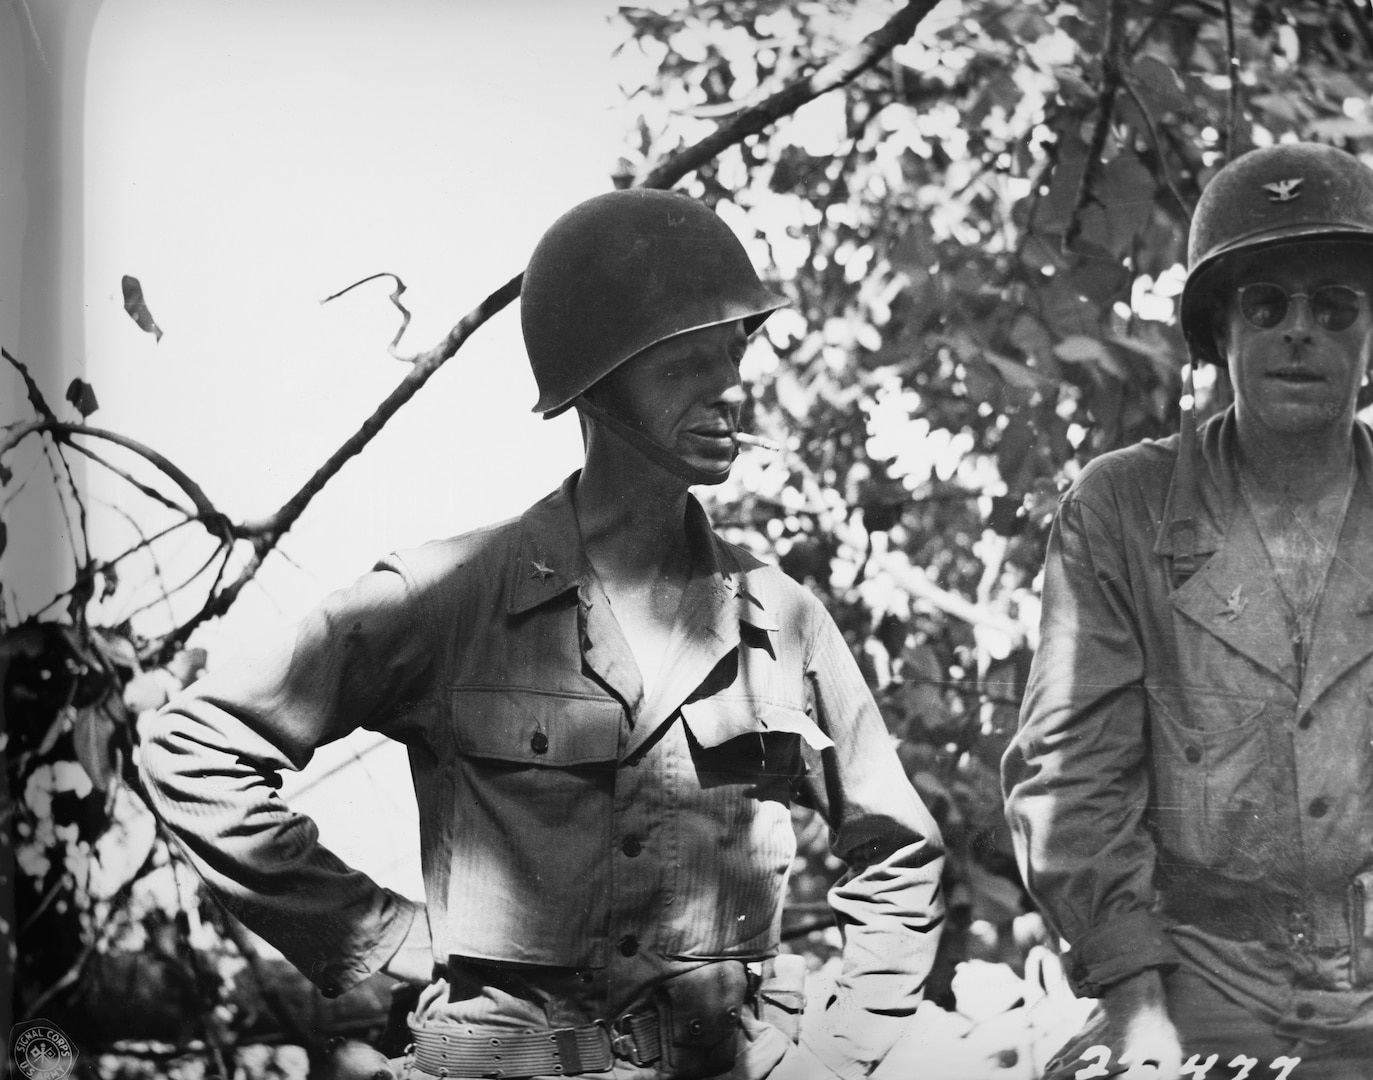 Brig. Gen. Robert McBride Jr., left, and Col. J.S. Bradley in the field near Teterei, New Guinea, Feb. 22, 1944. U.S. Army Signal Corps photo by Pvt. Ira Rosenberg